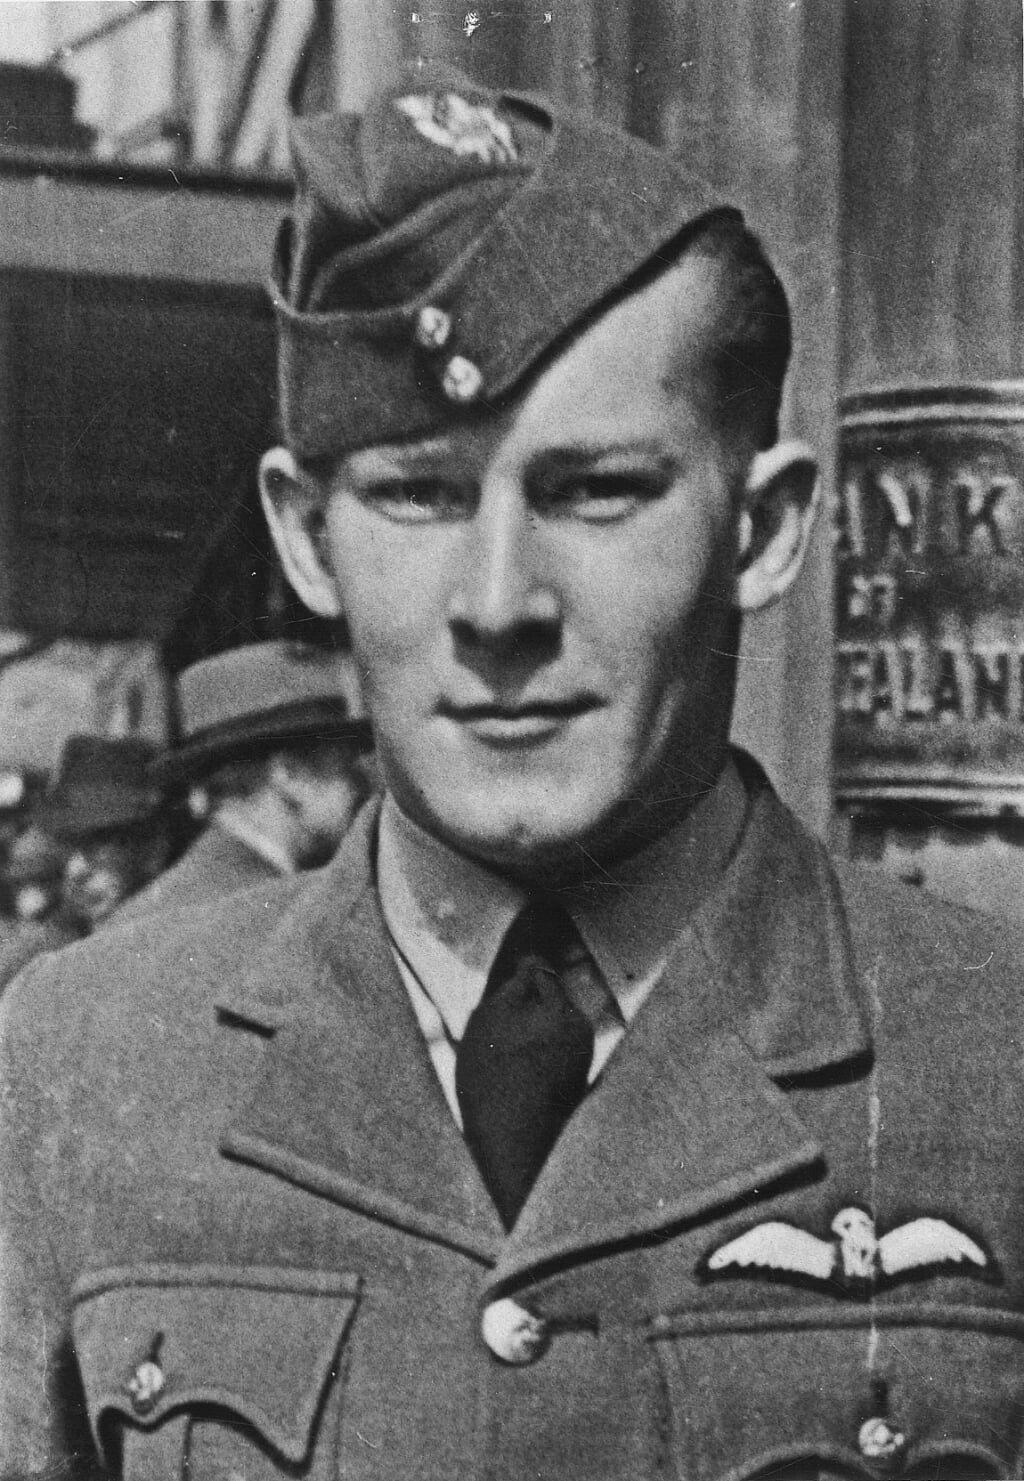 William Gibbs Abbott (Nieuw-Zeeland 9 mei 1922 - Zutphen 9 september 1944). Foto: Privéarchief